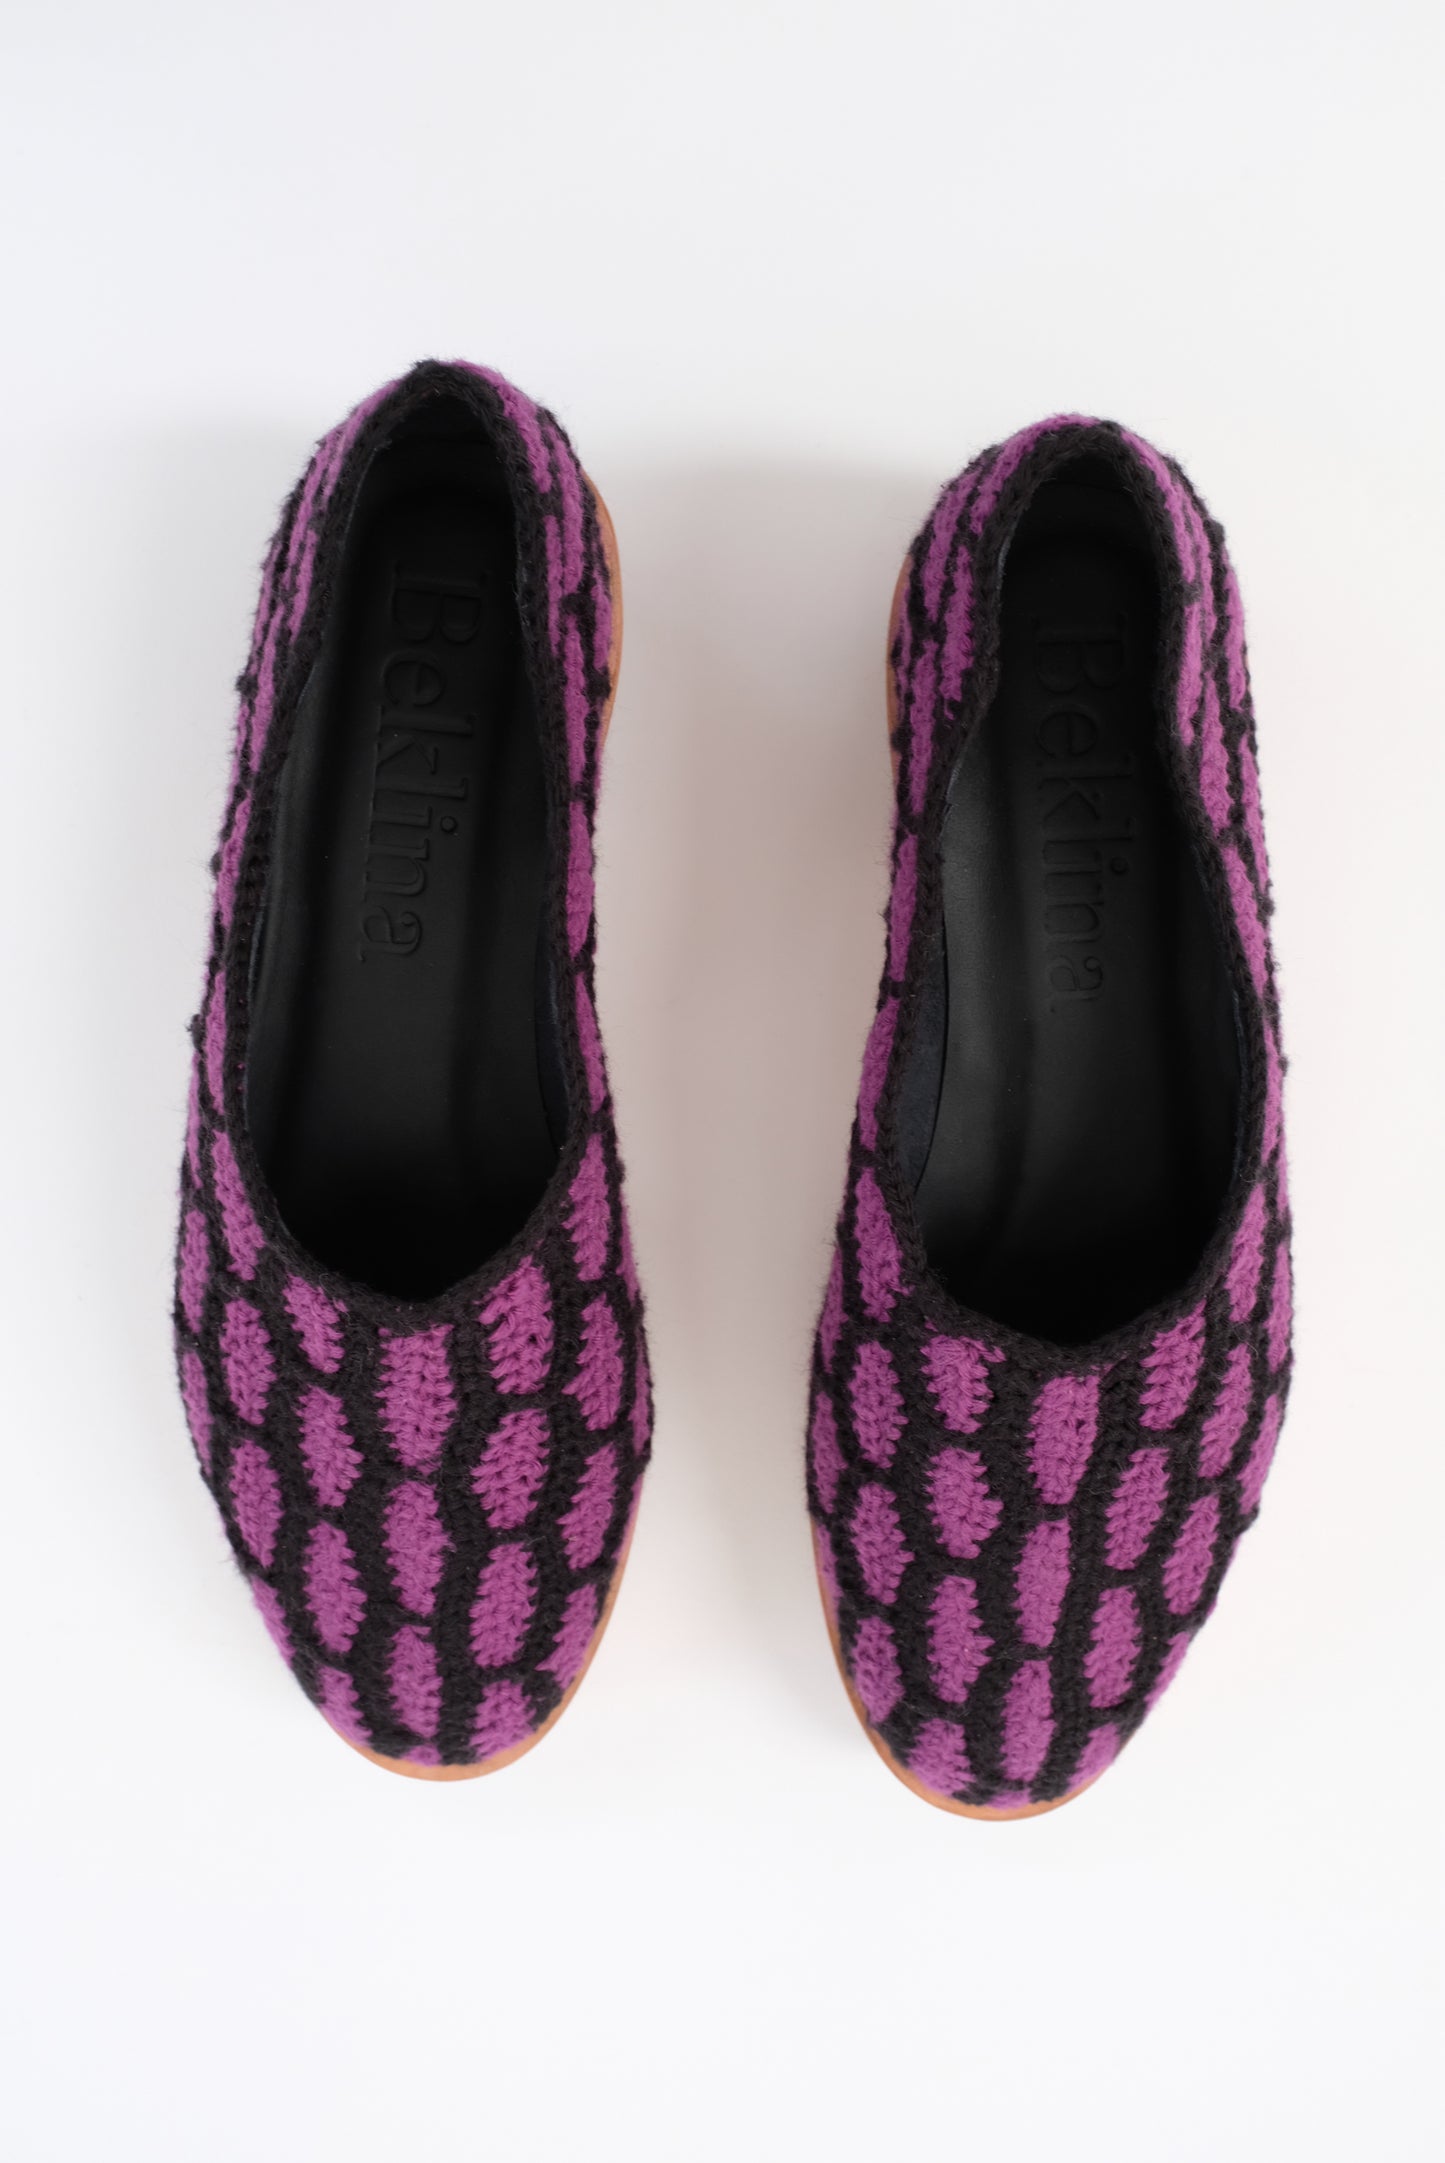 Beklina Aya Crochet Platform Black/Iris